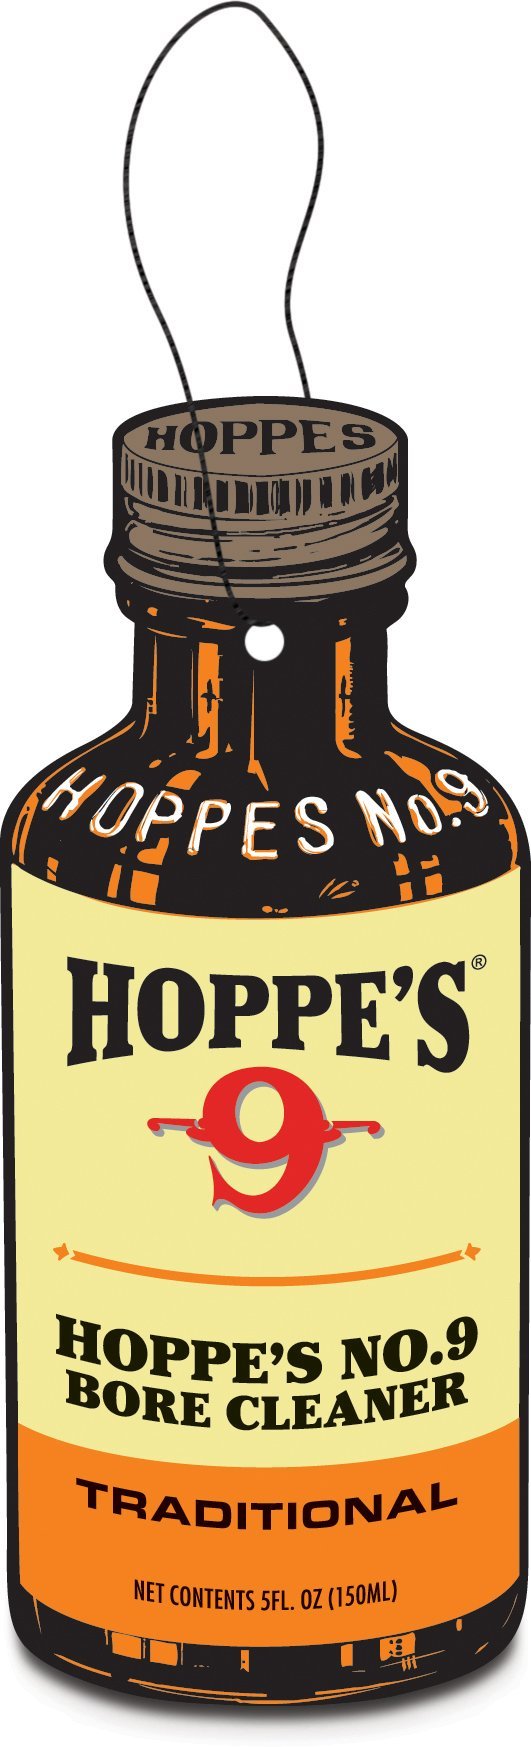 [AUSTRALIA] - Hoppe's No. 9 Air Freshener, Pack of 3 